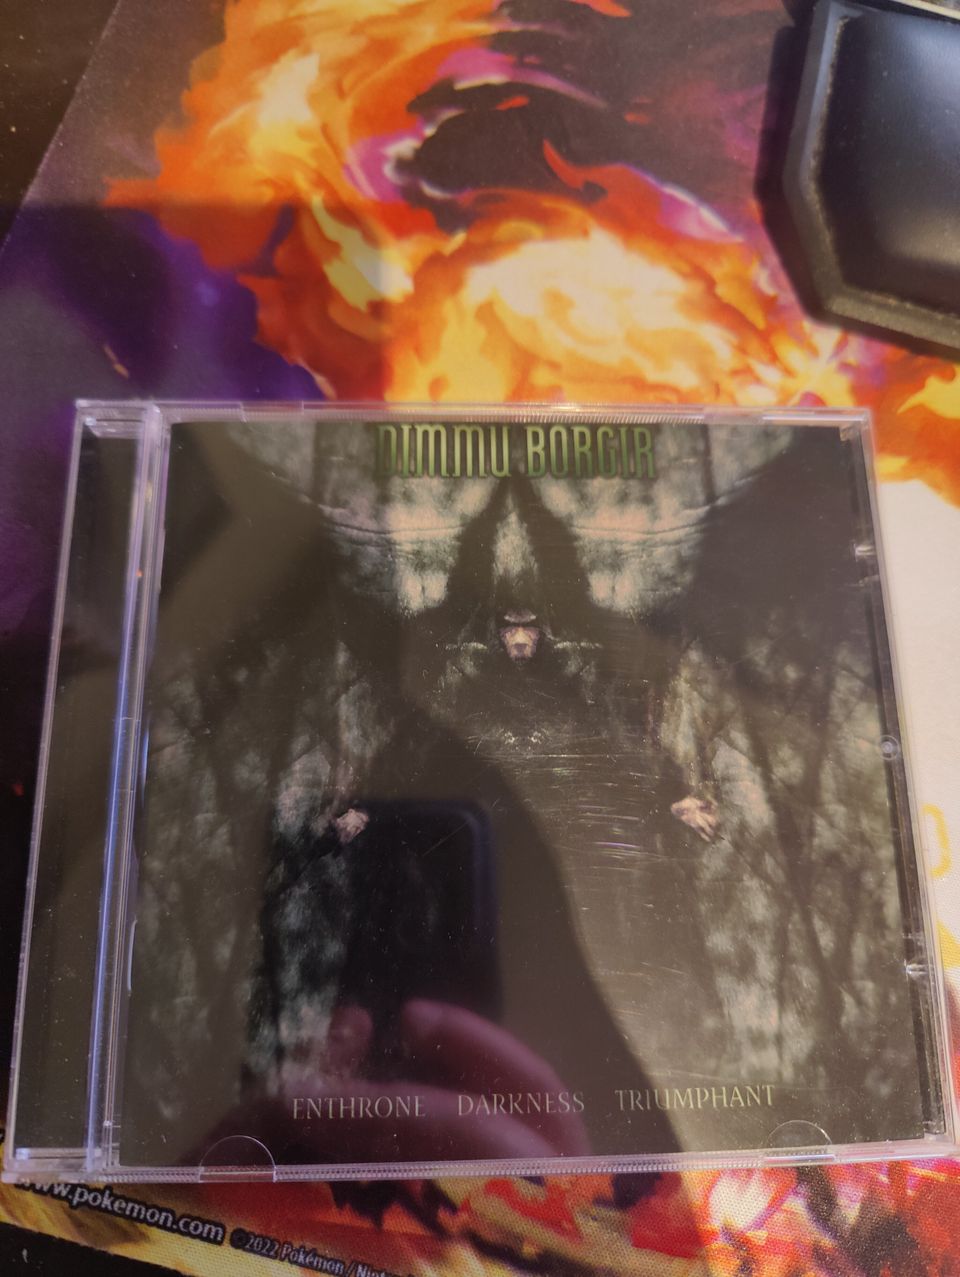 Dimmu Borgir enthrone darkness triumphant CD